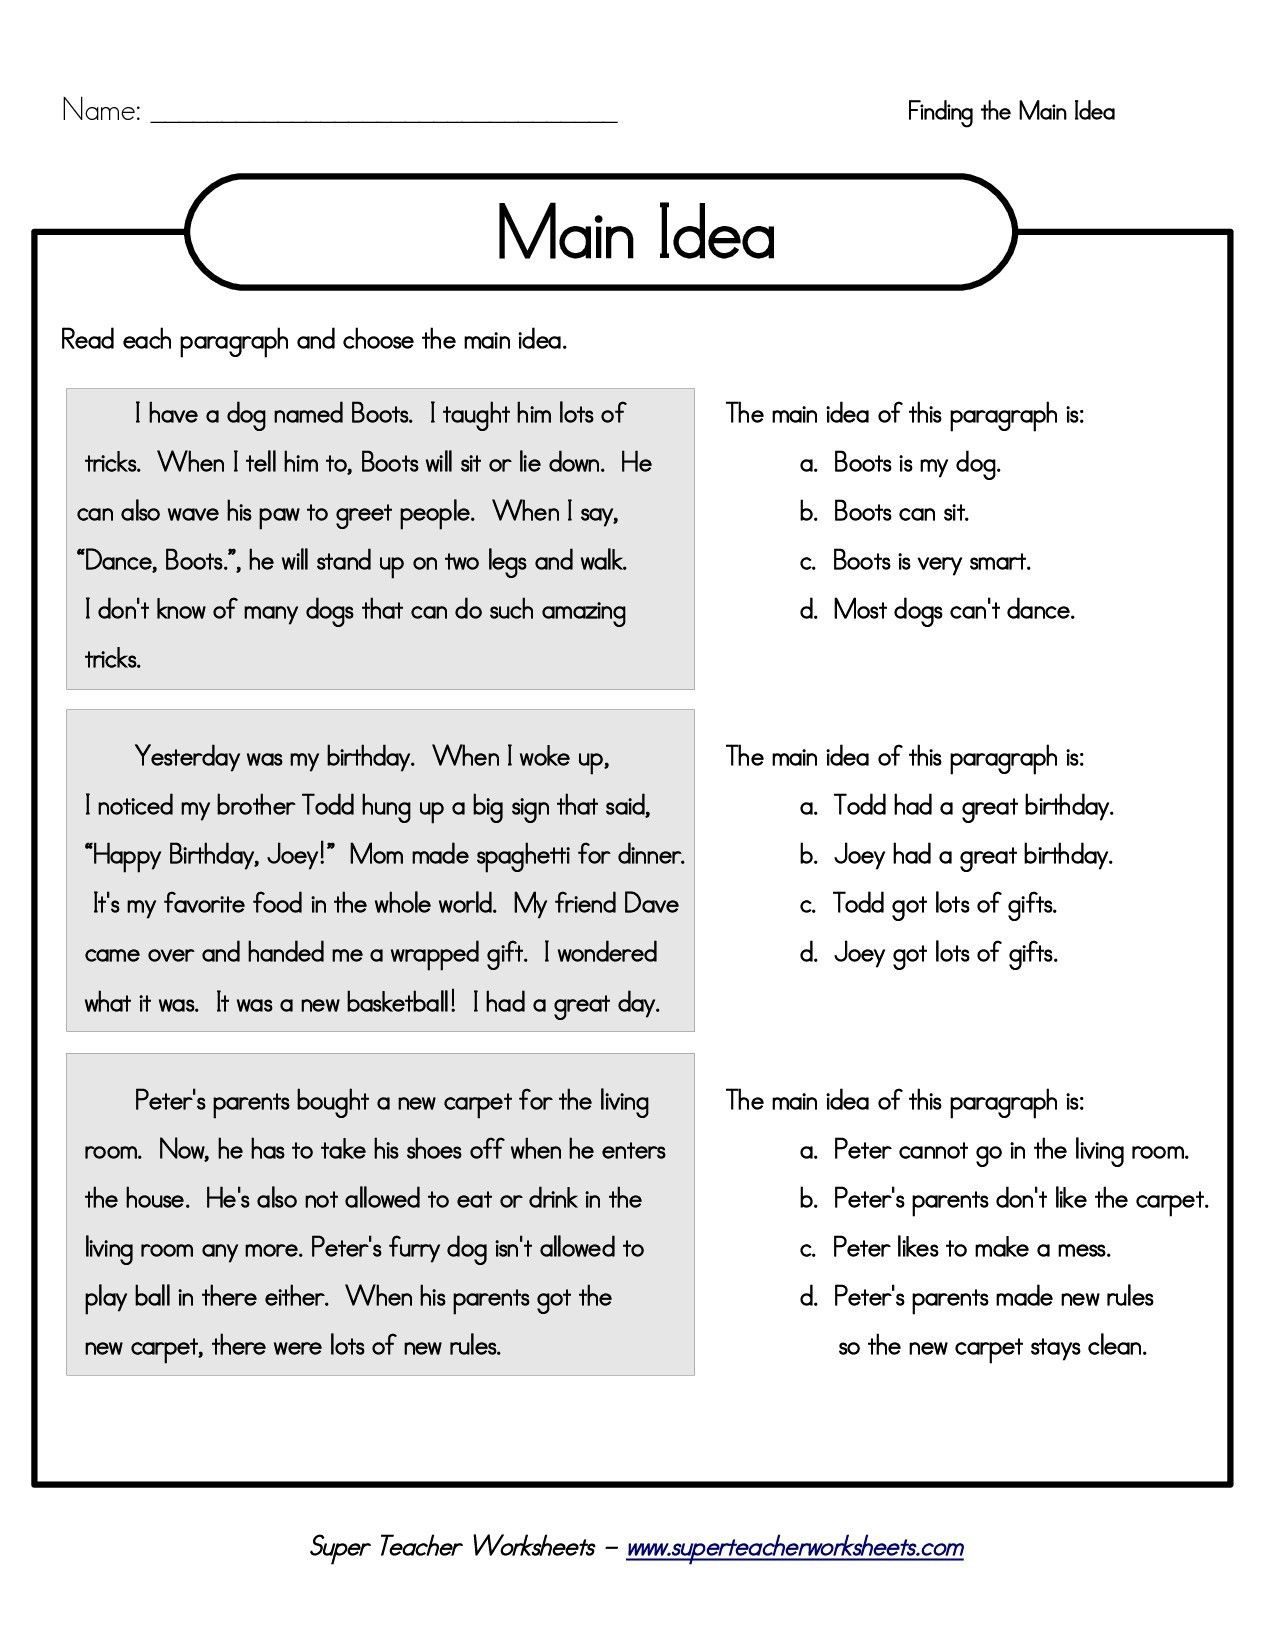 5th Grade Main Idea Worksheet Printable 5th Grade Main Idea Worksheets